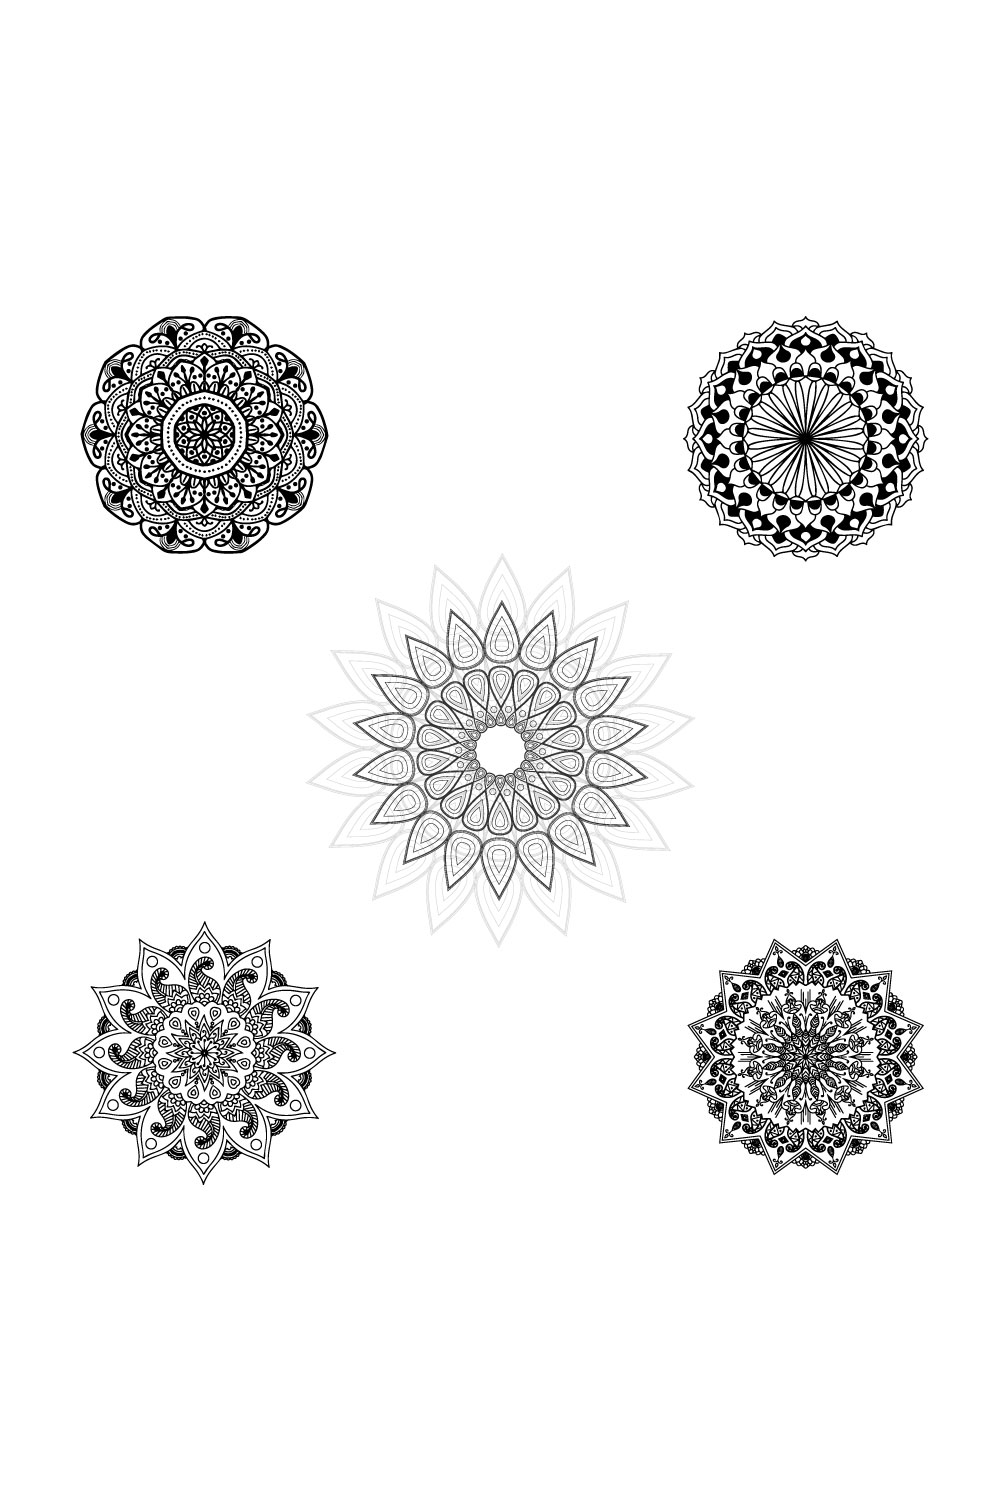 5 Black and White Mandala Design pinterest image.